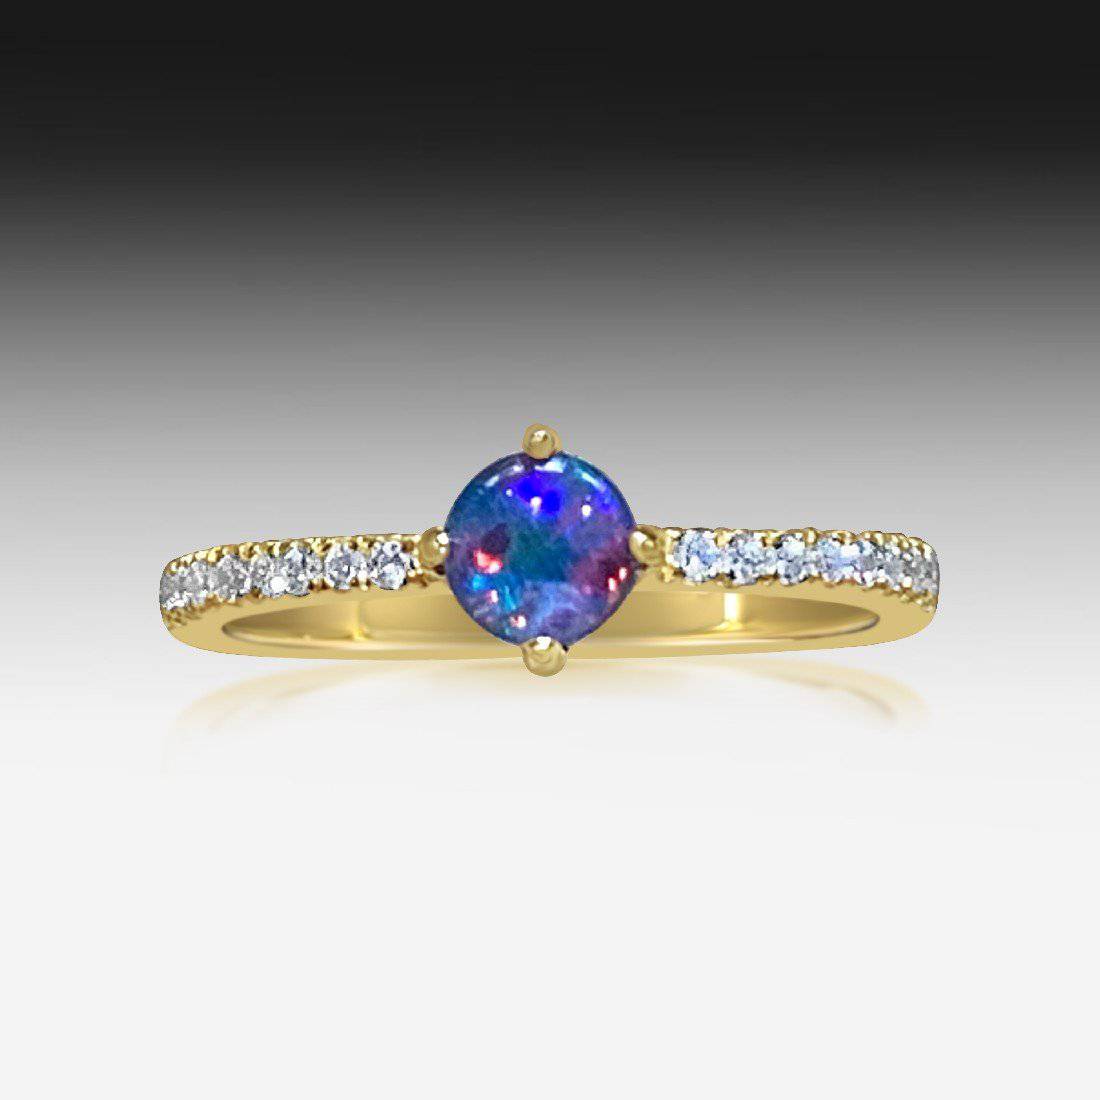 Sterling Silver Gold plated Opal triplet ring - Masterpiece Jewellery Opal & Gems Sydney Australia | Online Shop